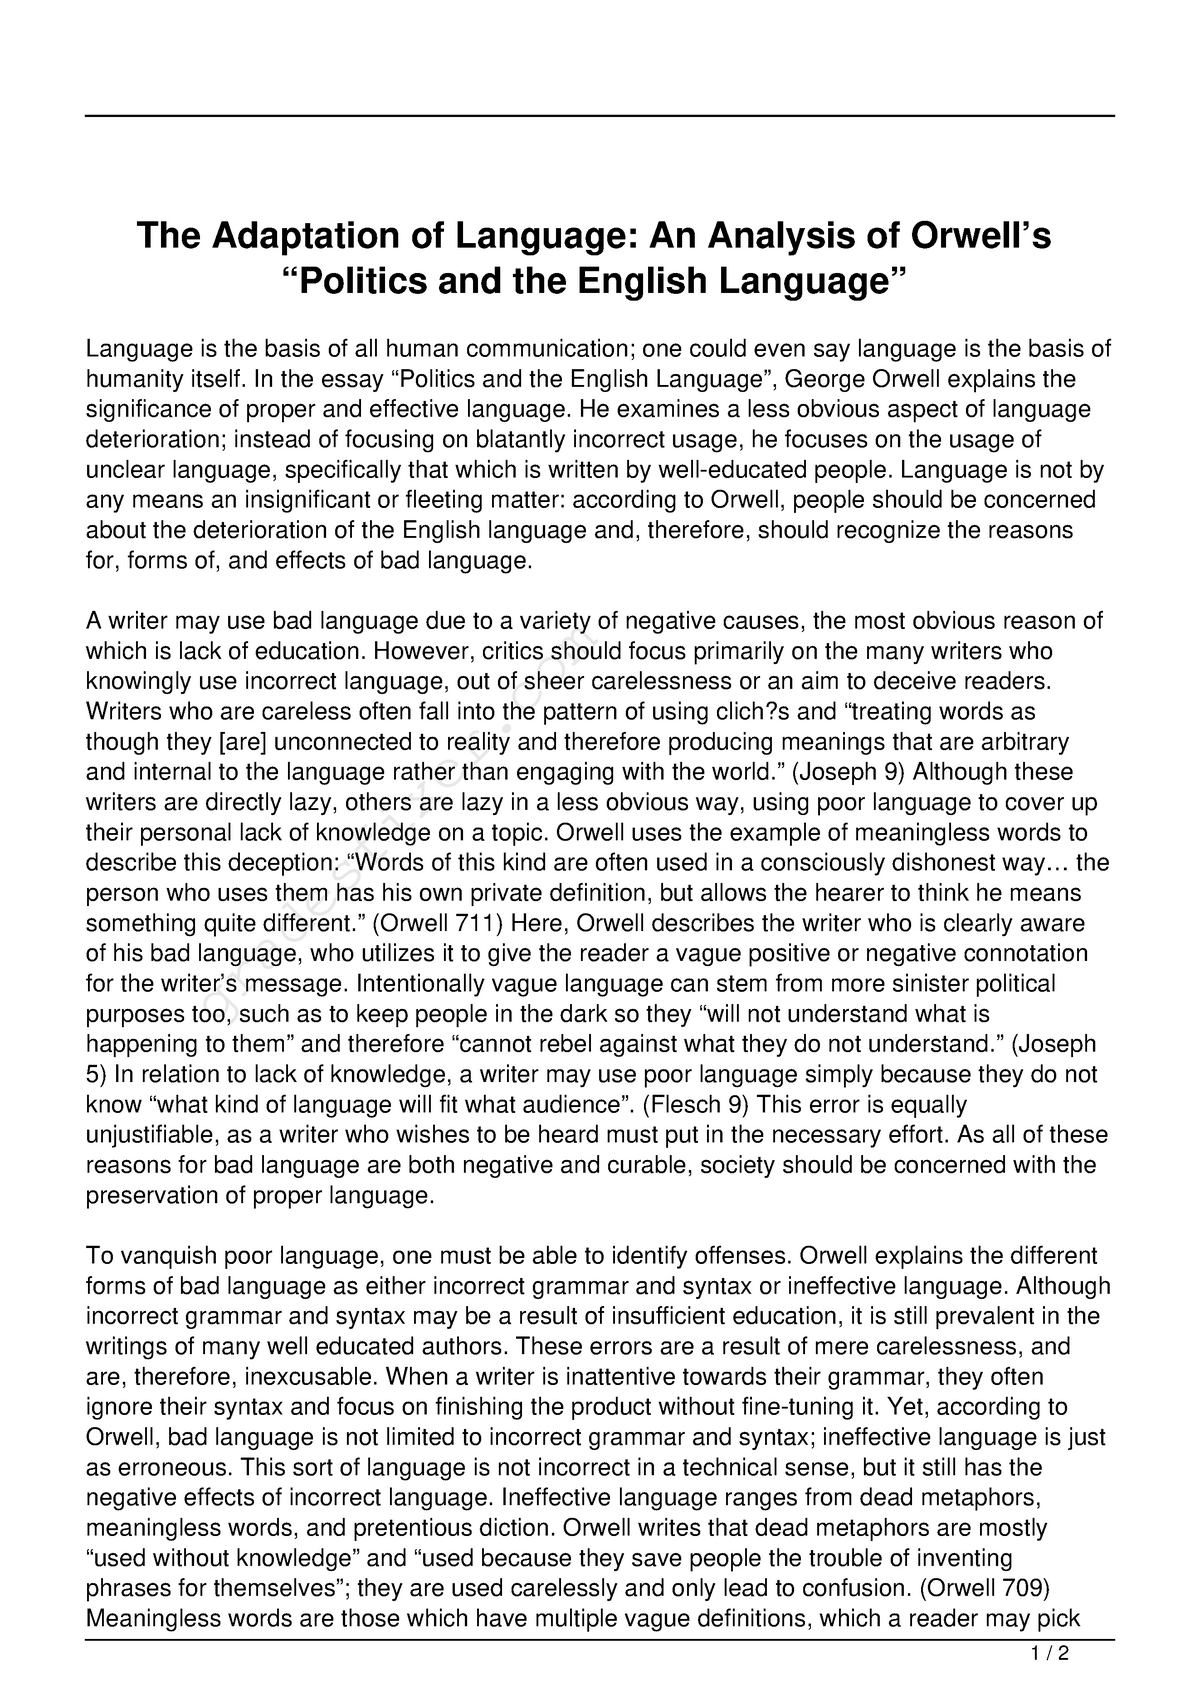 george orwell politics and the english language analysis